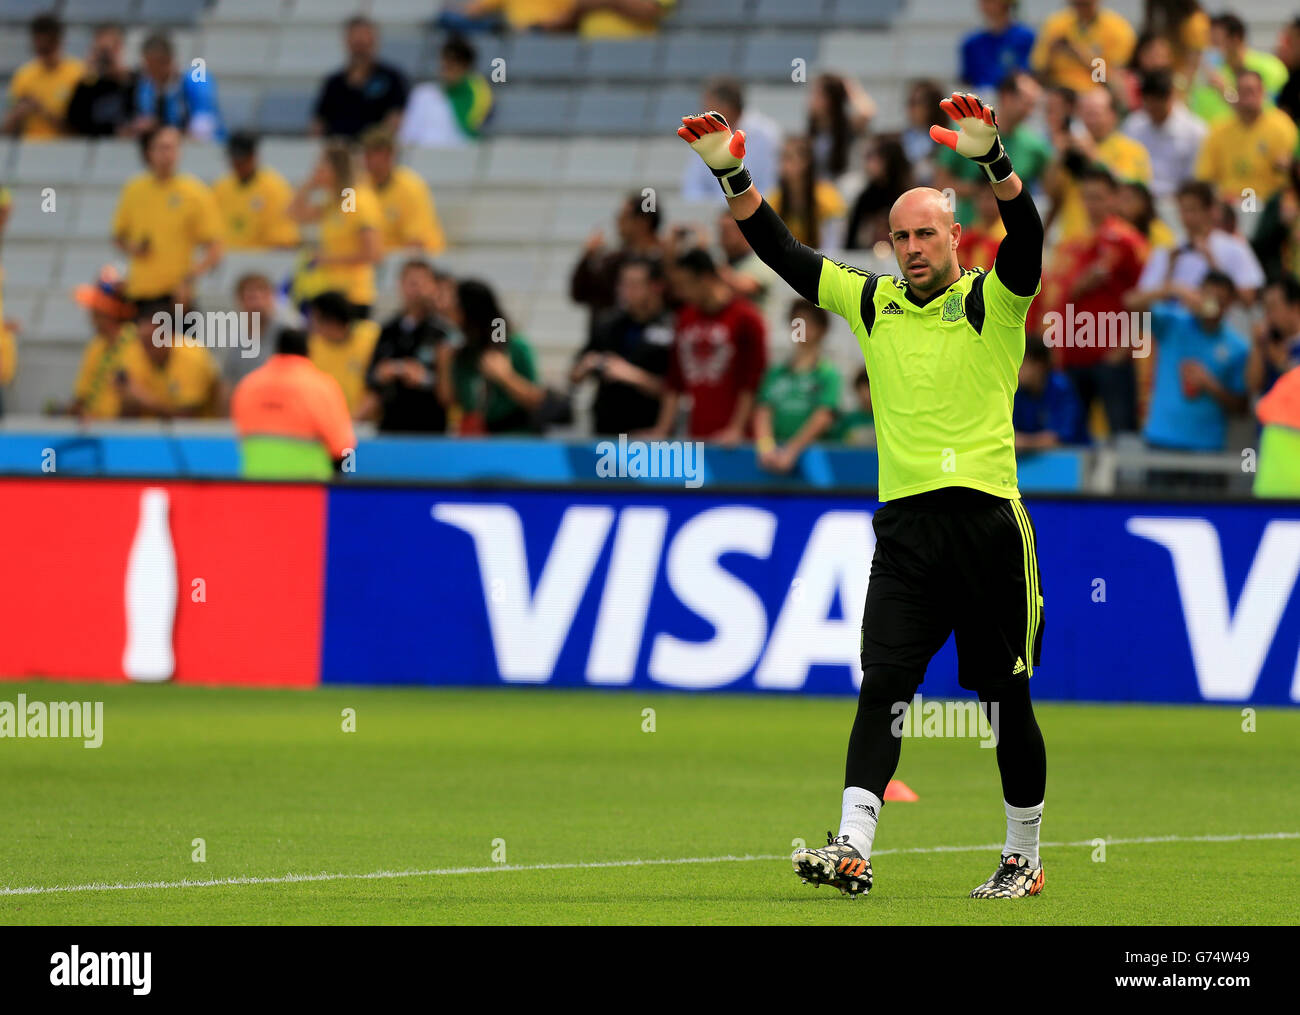 Soccer - FIFA World Cup 2014 - Group B - Australia v Spain - Arena da Baixada. Spain's Pepe Reina during warm-up Stock Photo